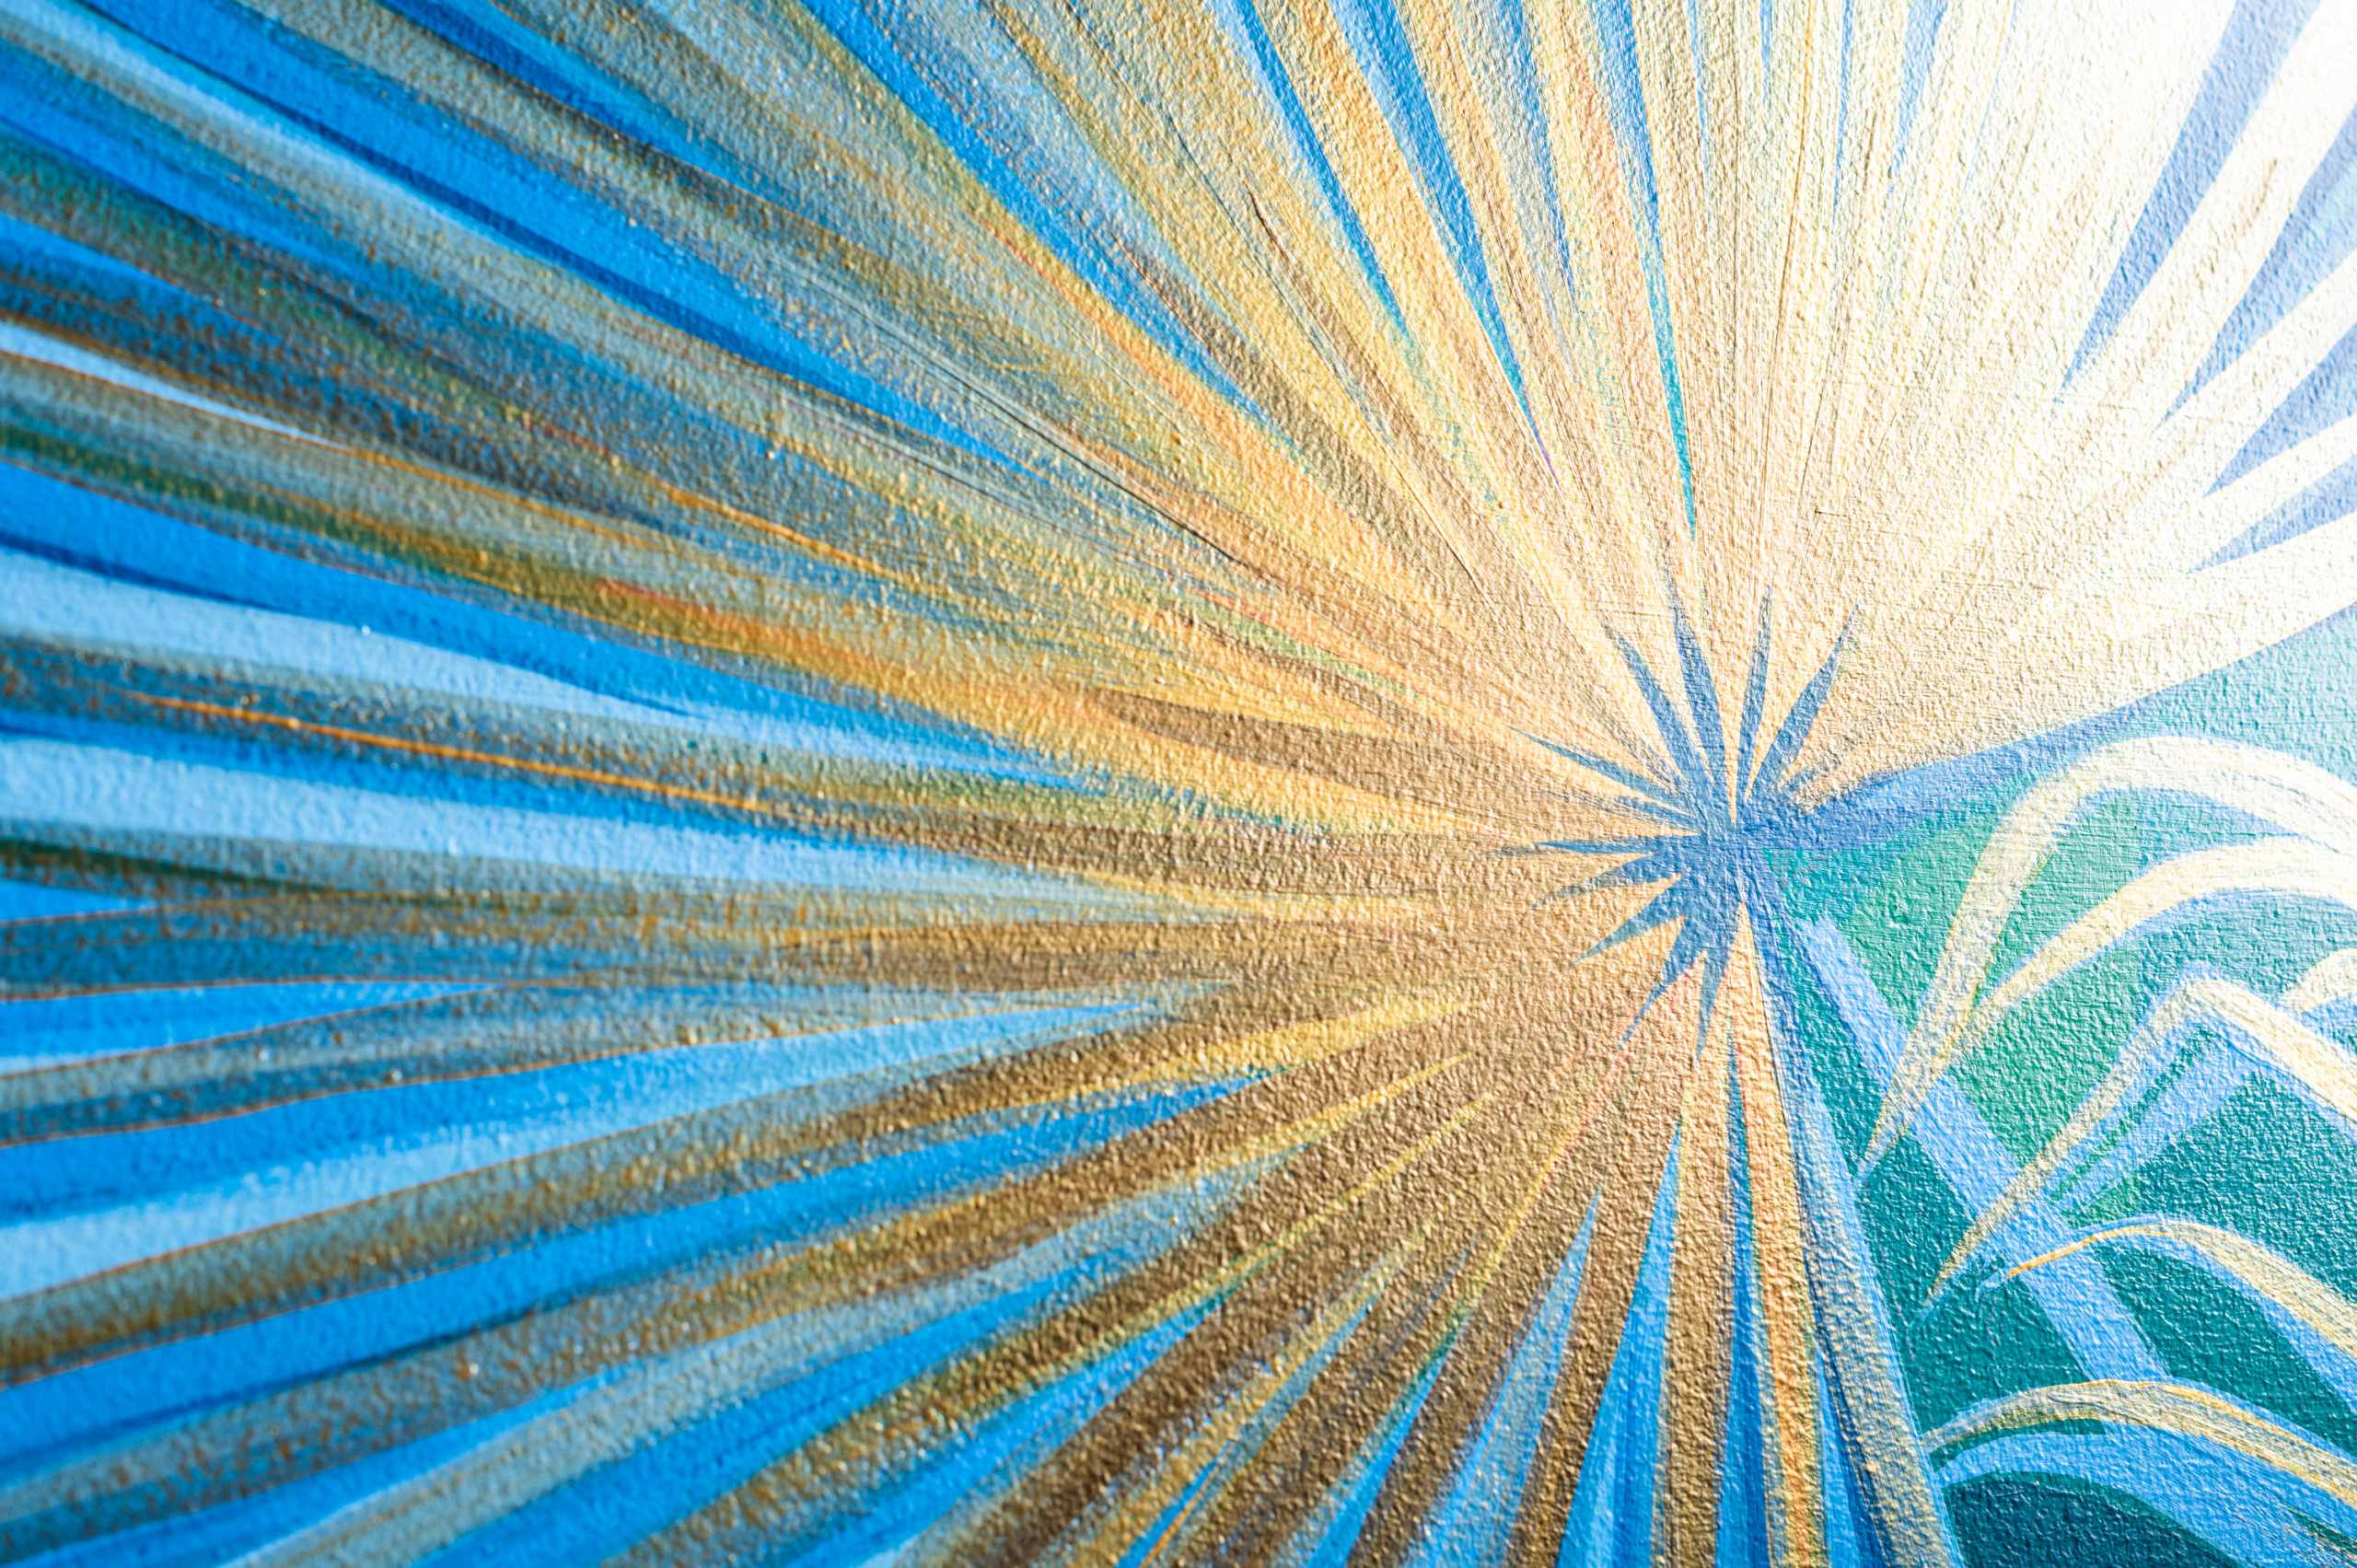 Details of an iridescent palm frond